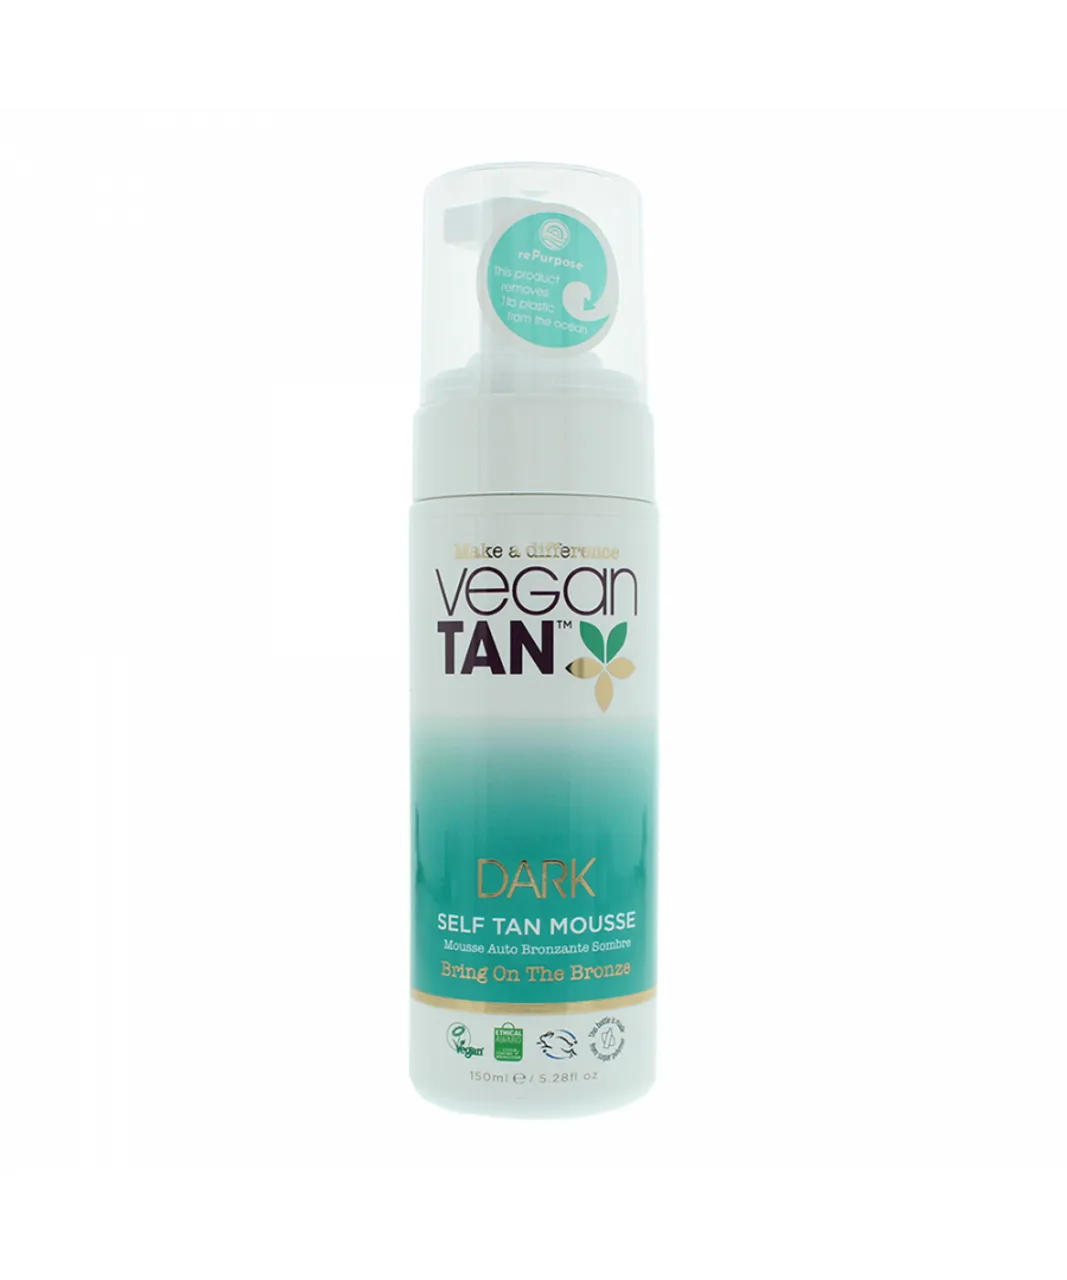 Vegan Tan Dark Self Tan Mousse 150ml - One Size